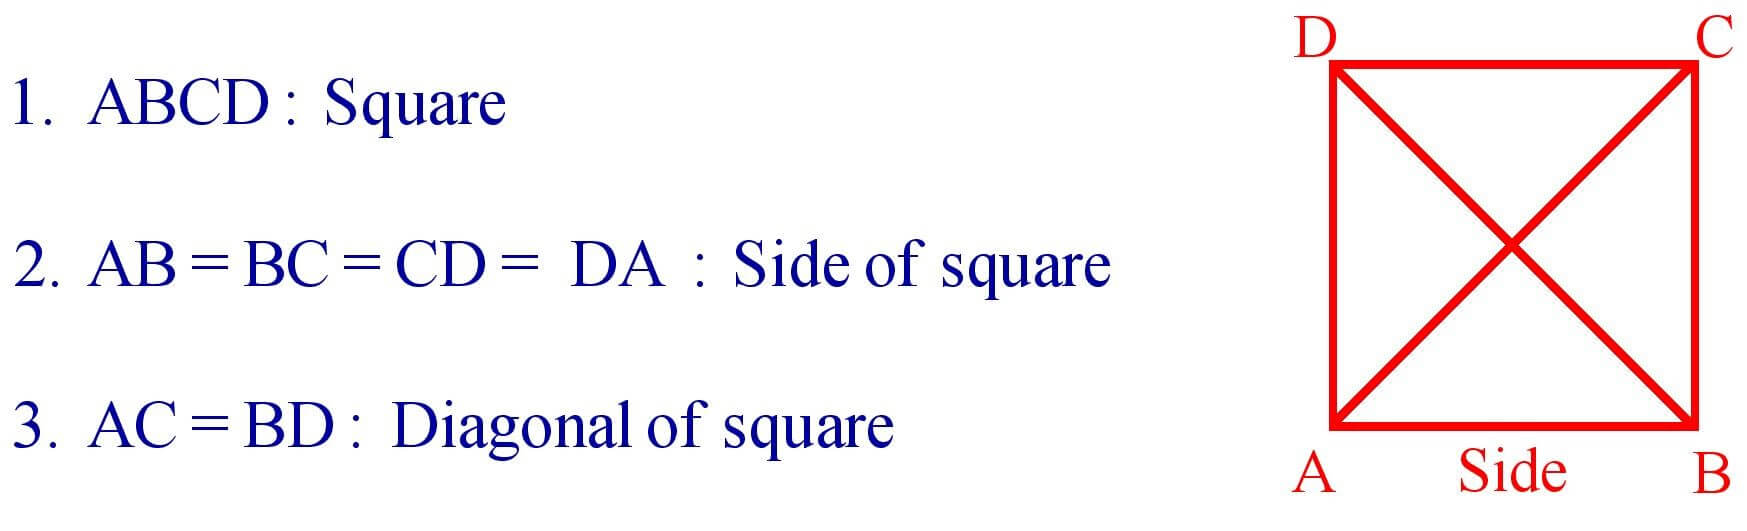 Square formula in mensuration